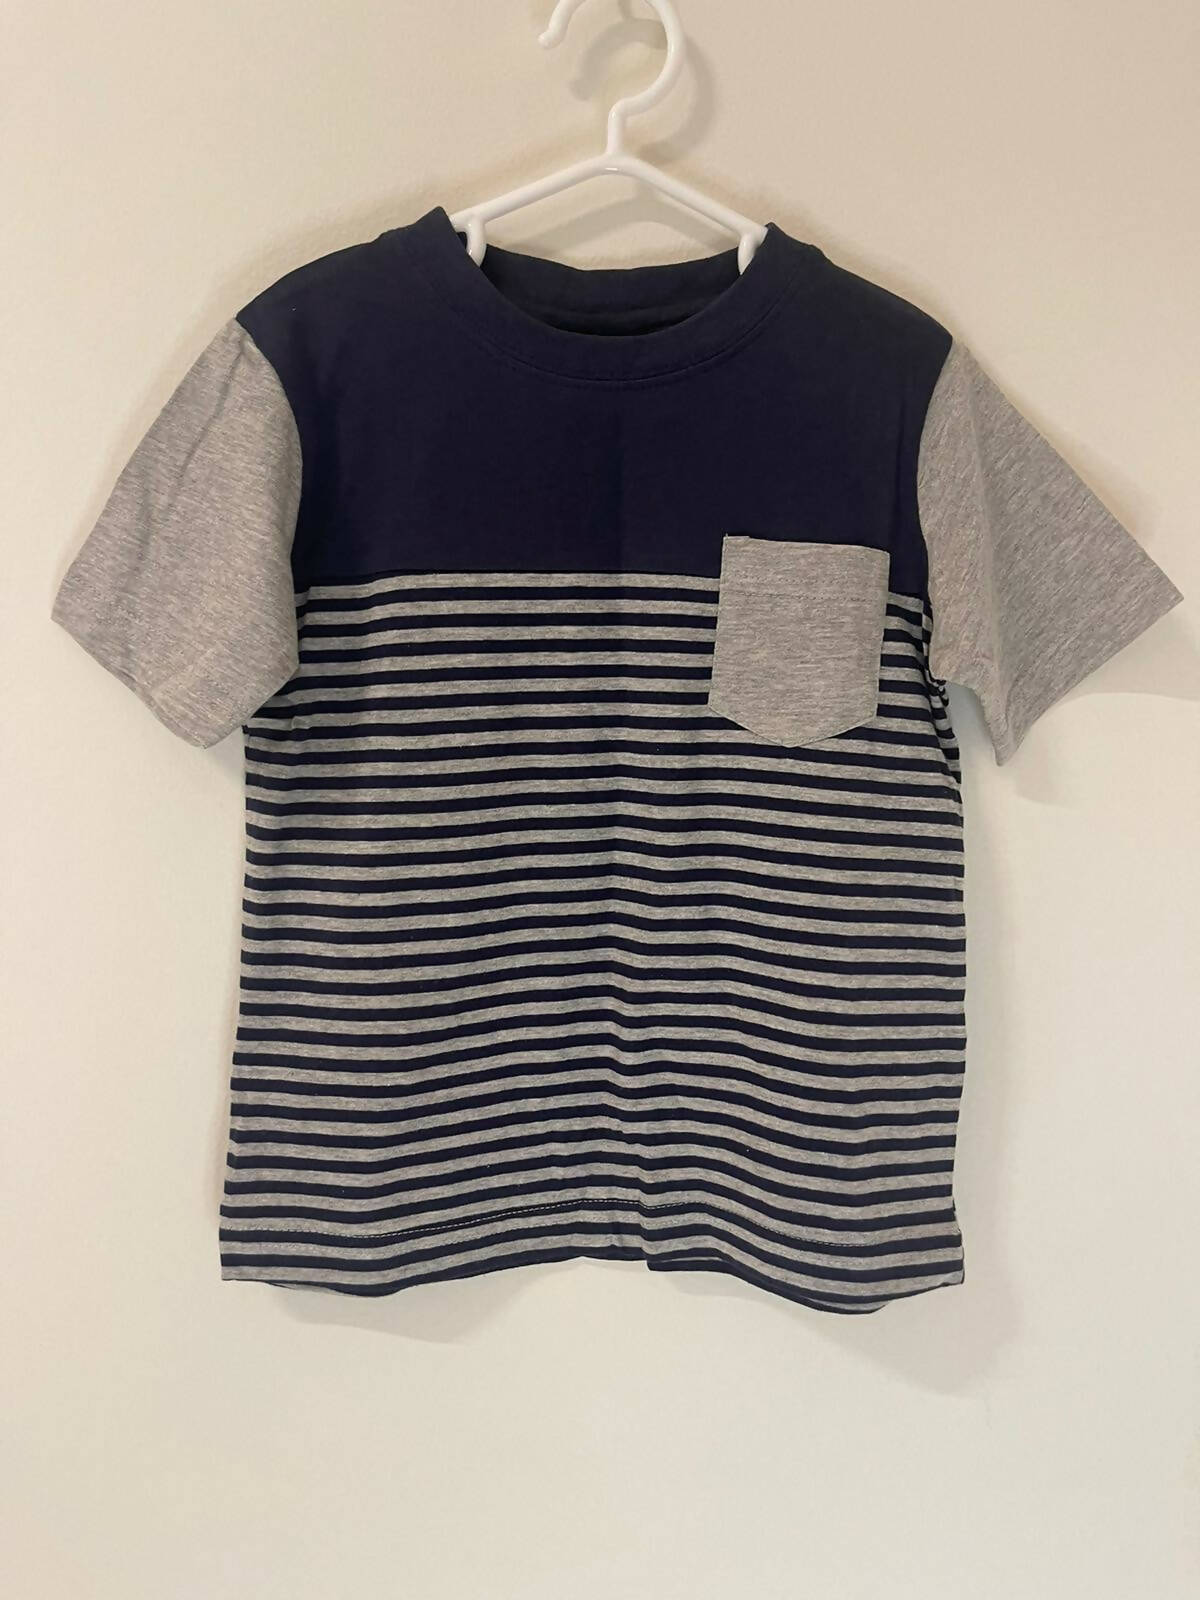 Grey striped Shirt | Boys Tops & Shirts | Preloved